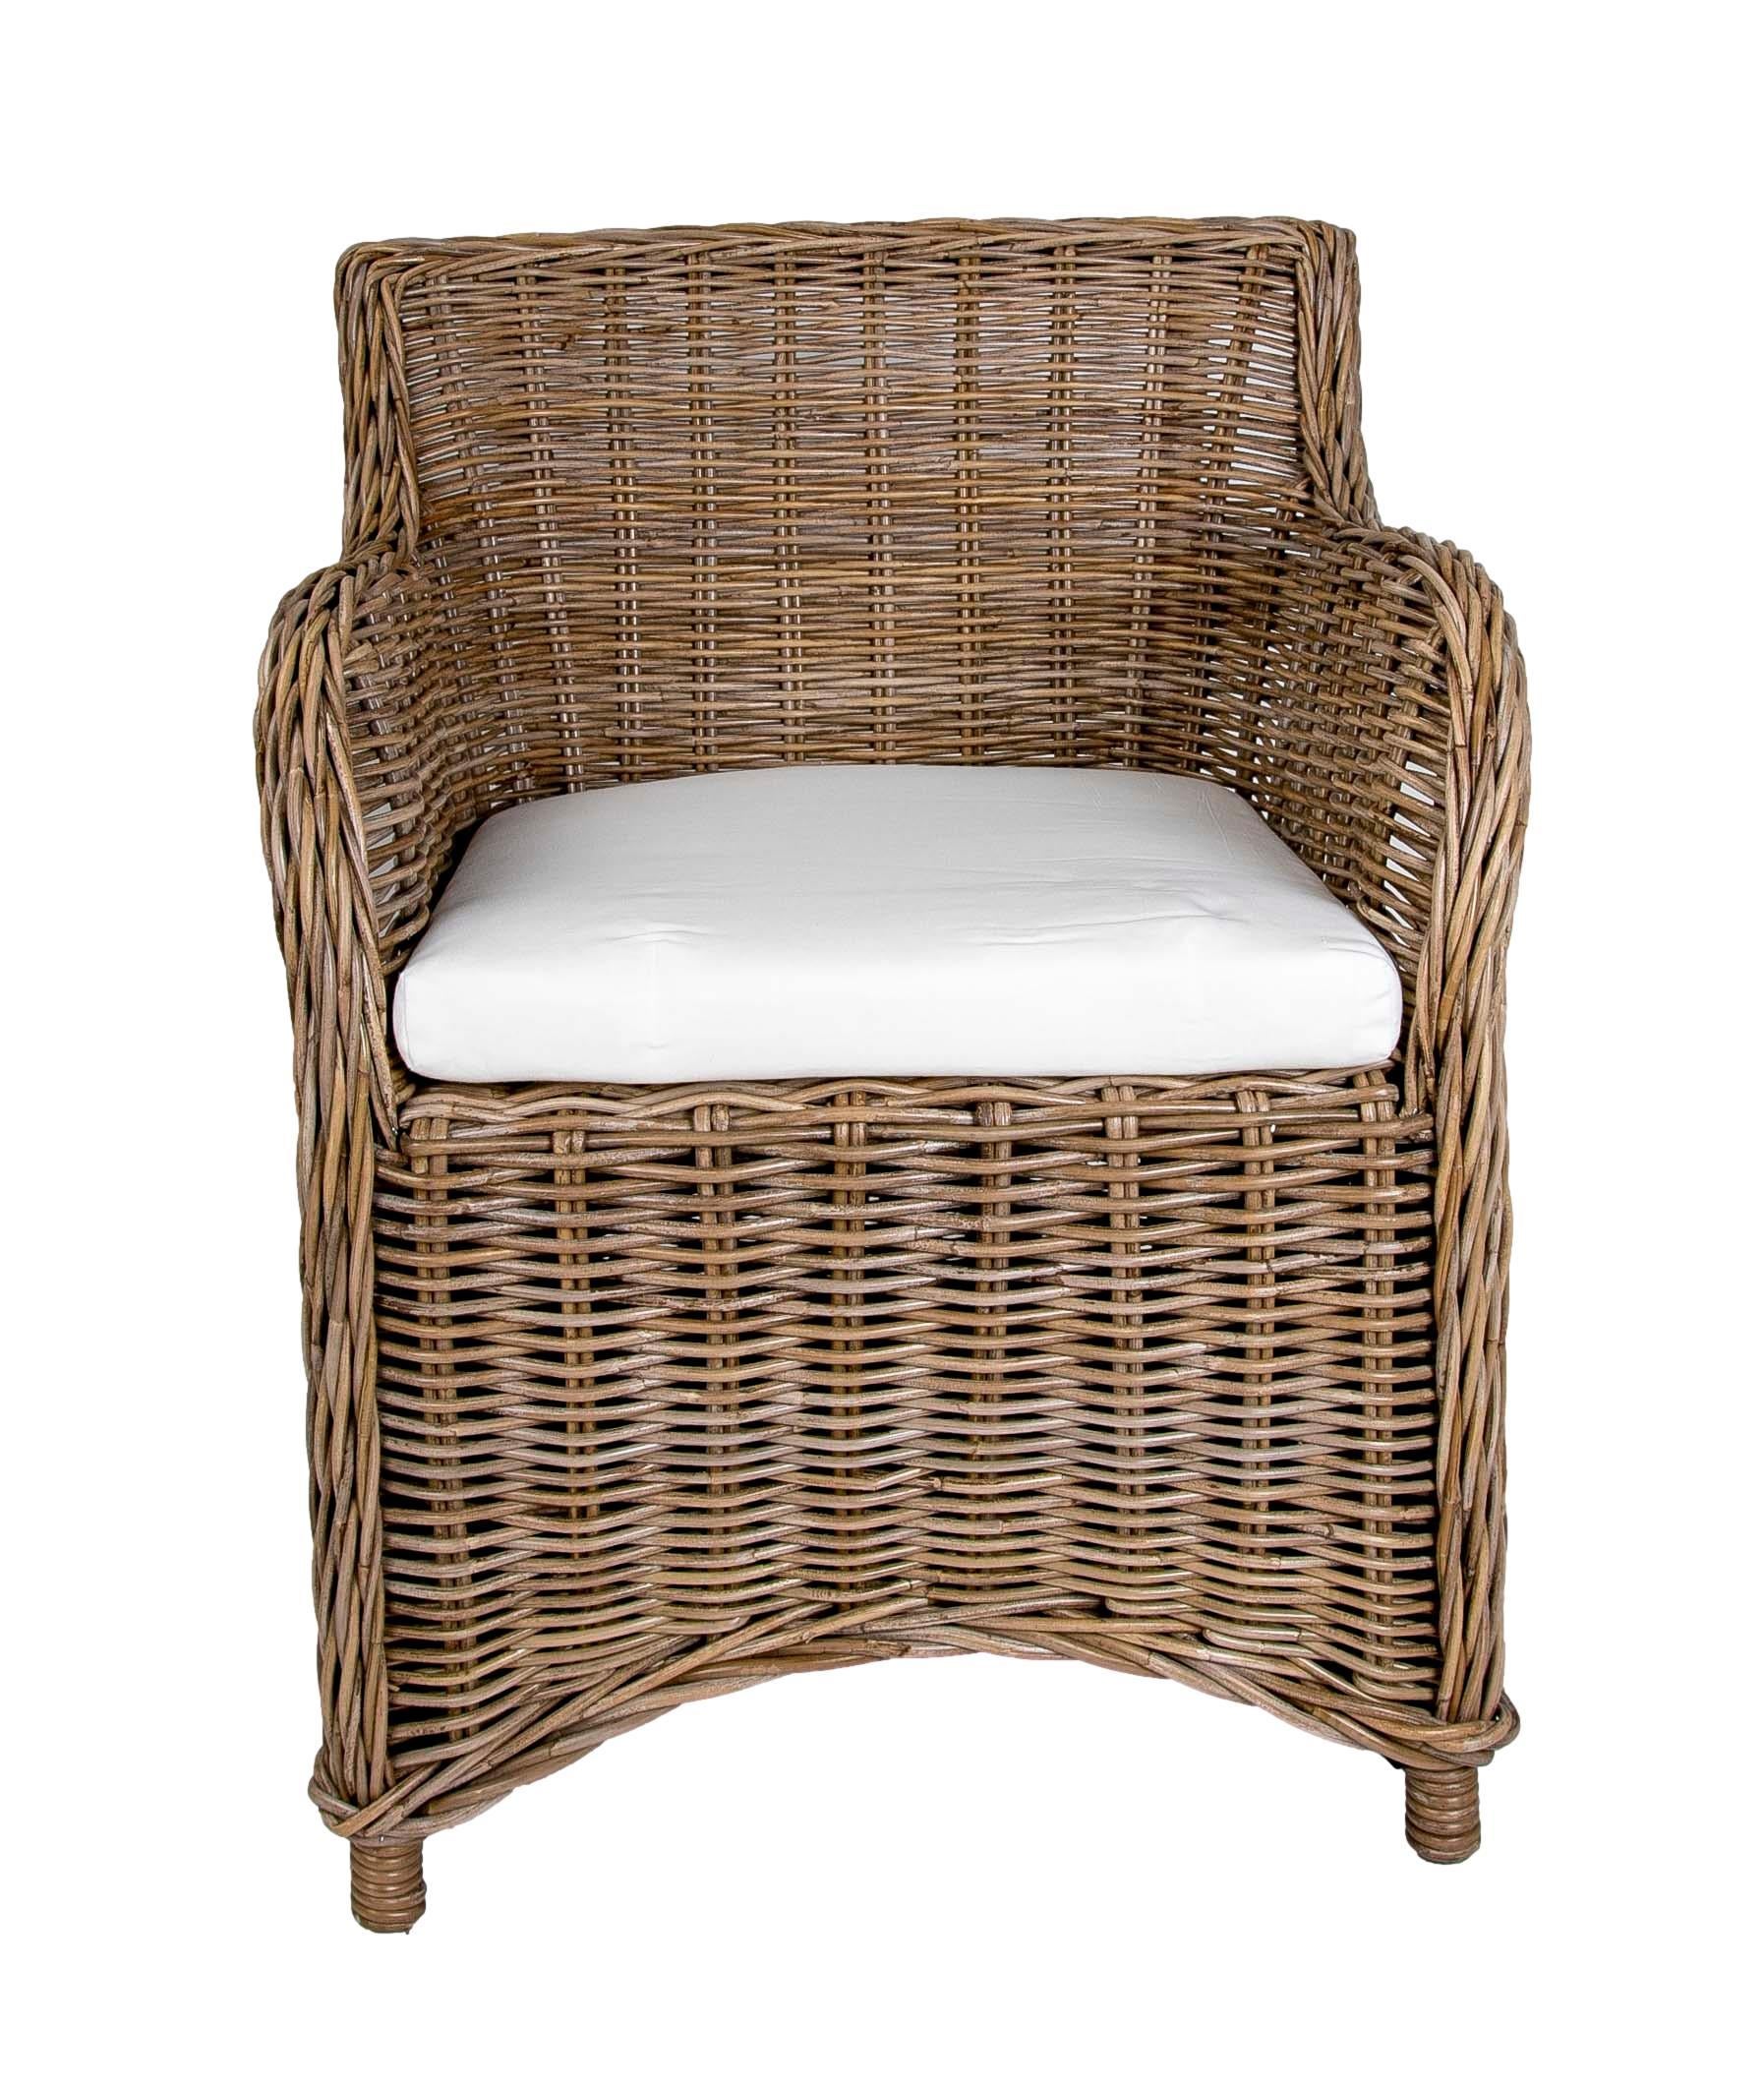  Rattan Garden Chair with Cushion in Greyish Tone For Sale 2